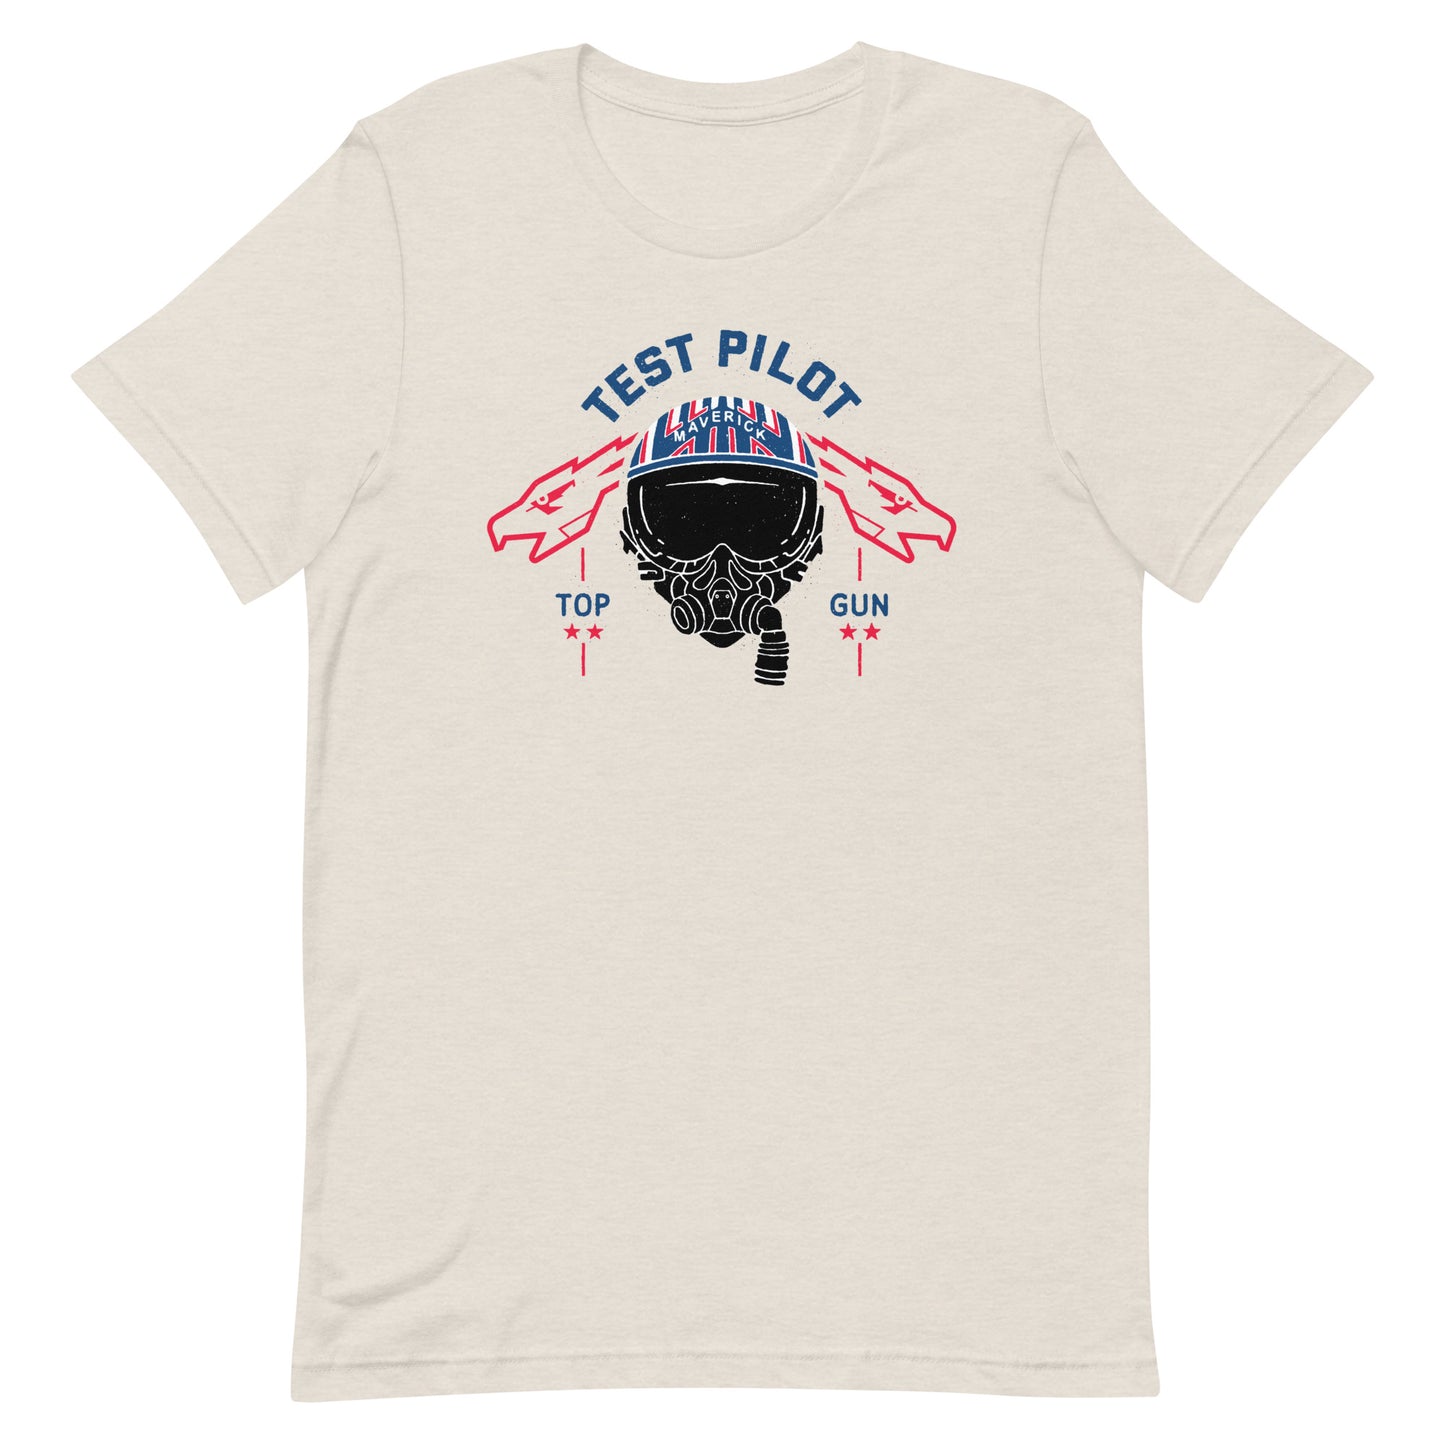 Top Gun: Maverick Test Pilot Unisex Premium T-Shirt